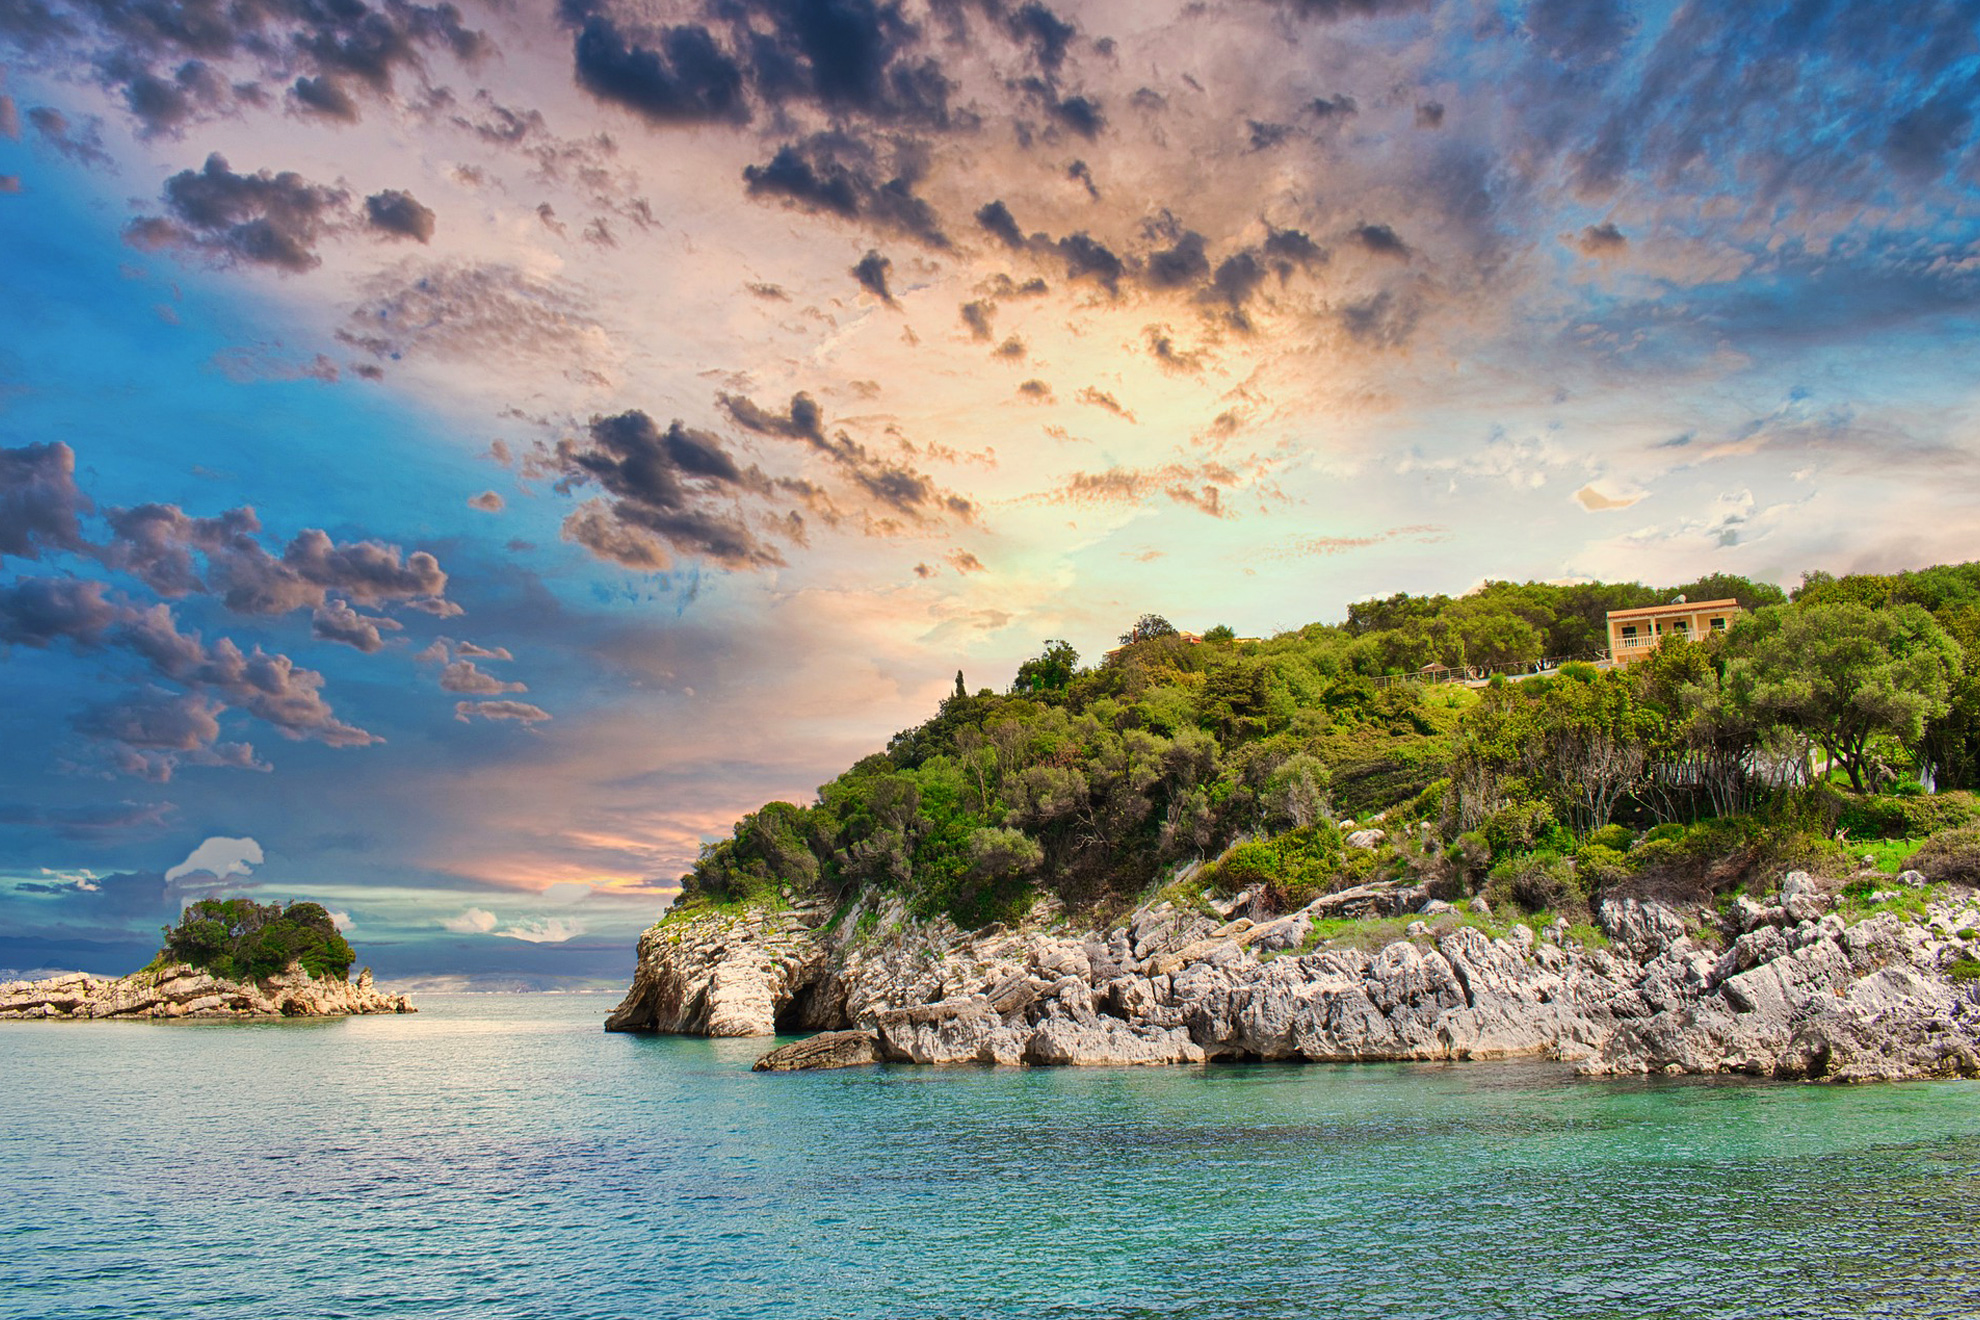 Великден на остров Корфу, хотел Messonghi Beach 3+* - Корфу, Гърция - Corfu (Kerkyra), Greece